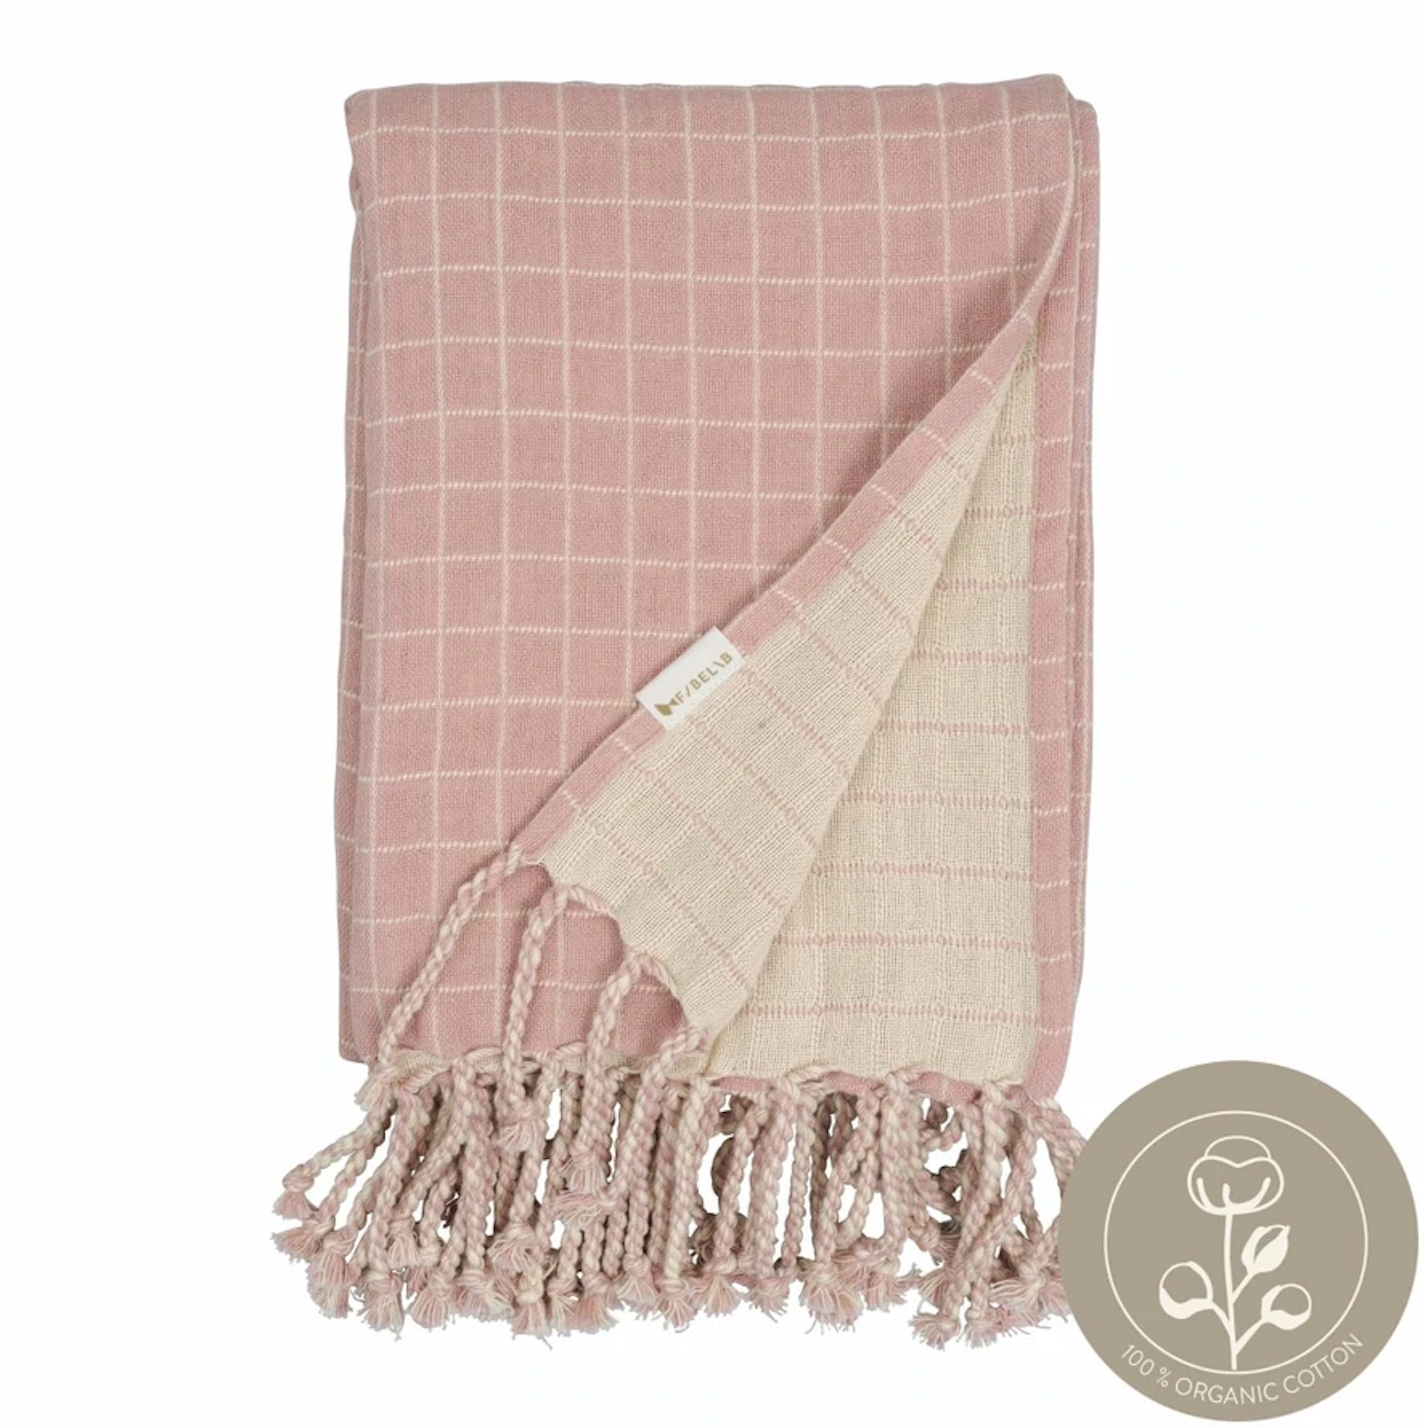 Grid Baby Blanket in Old Rose